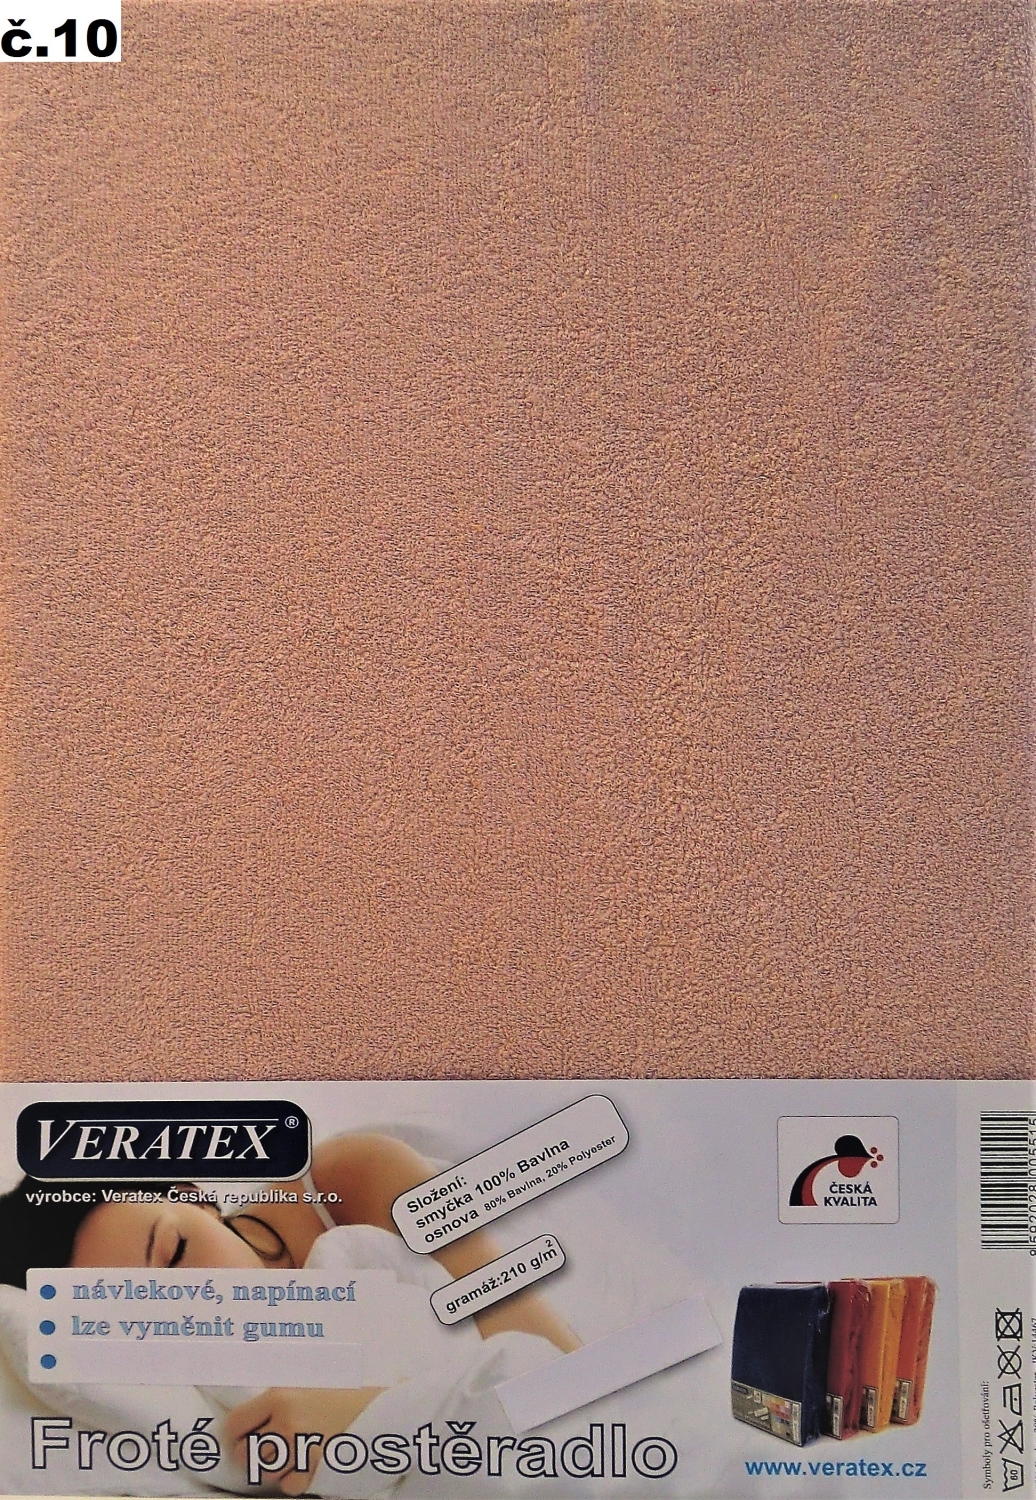 Veratex Froté prostěradlo 140x200 cm (č.10-starorůžová)